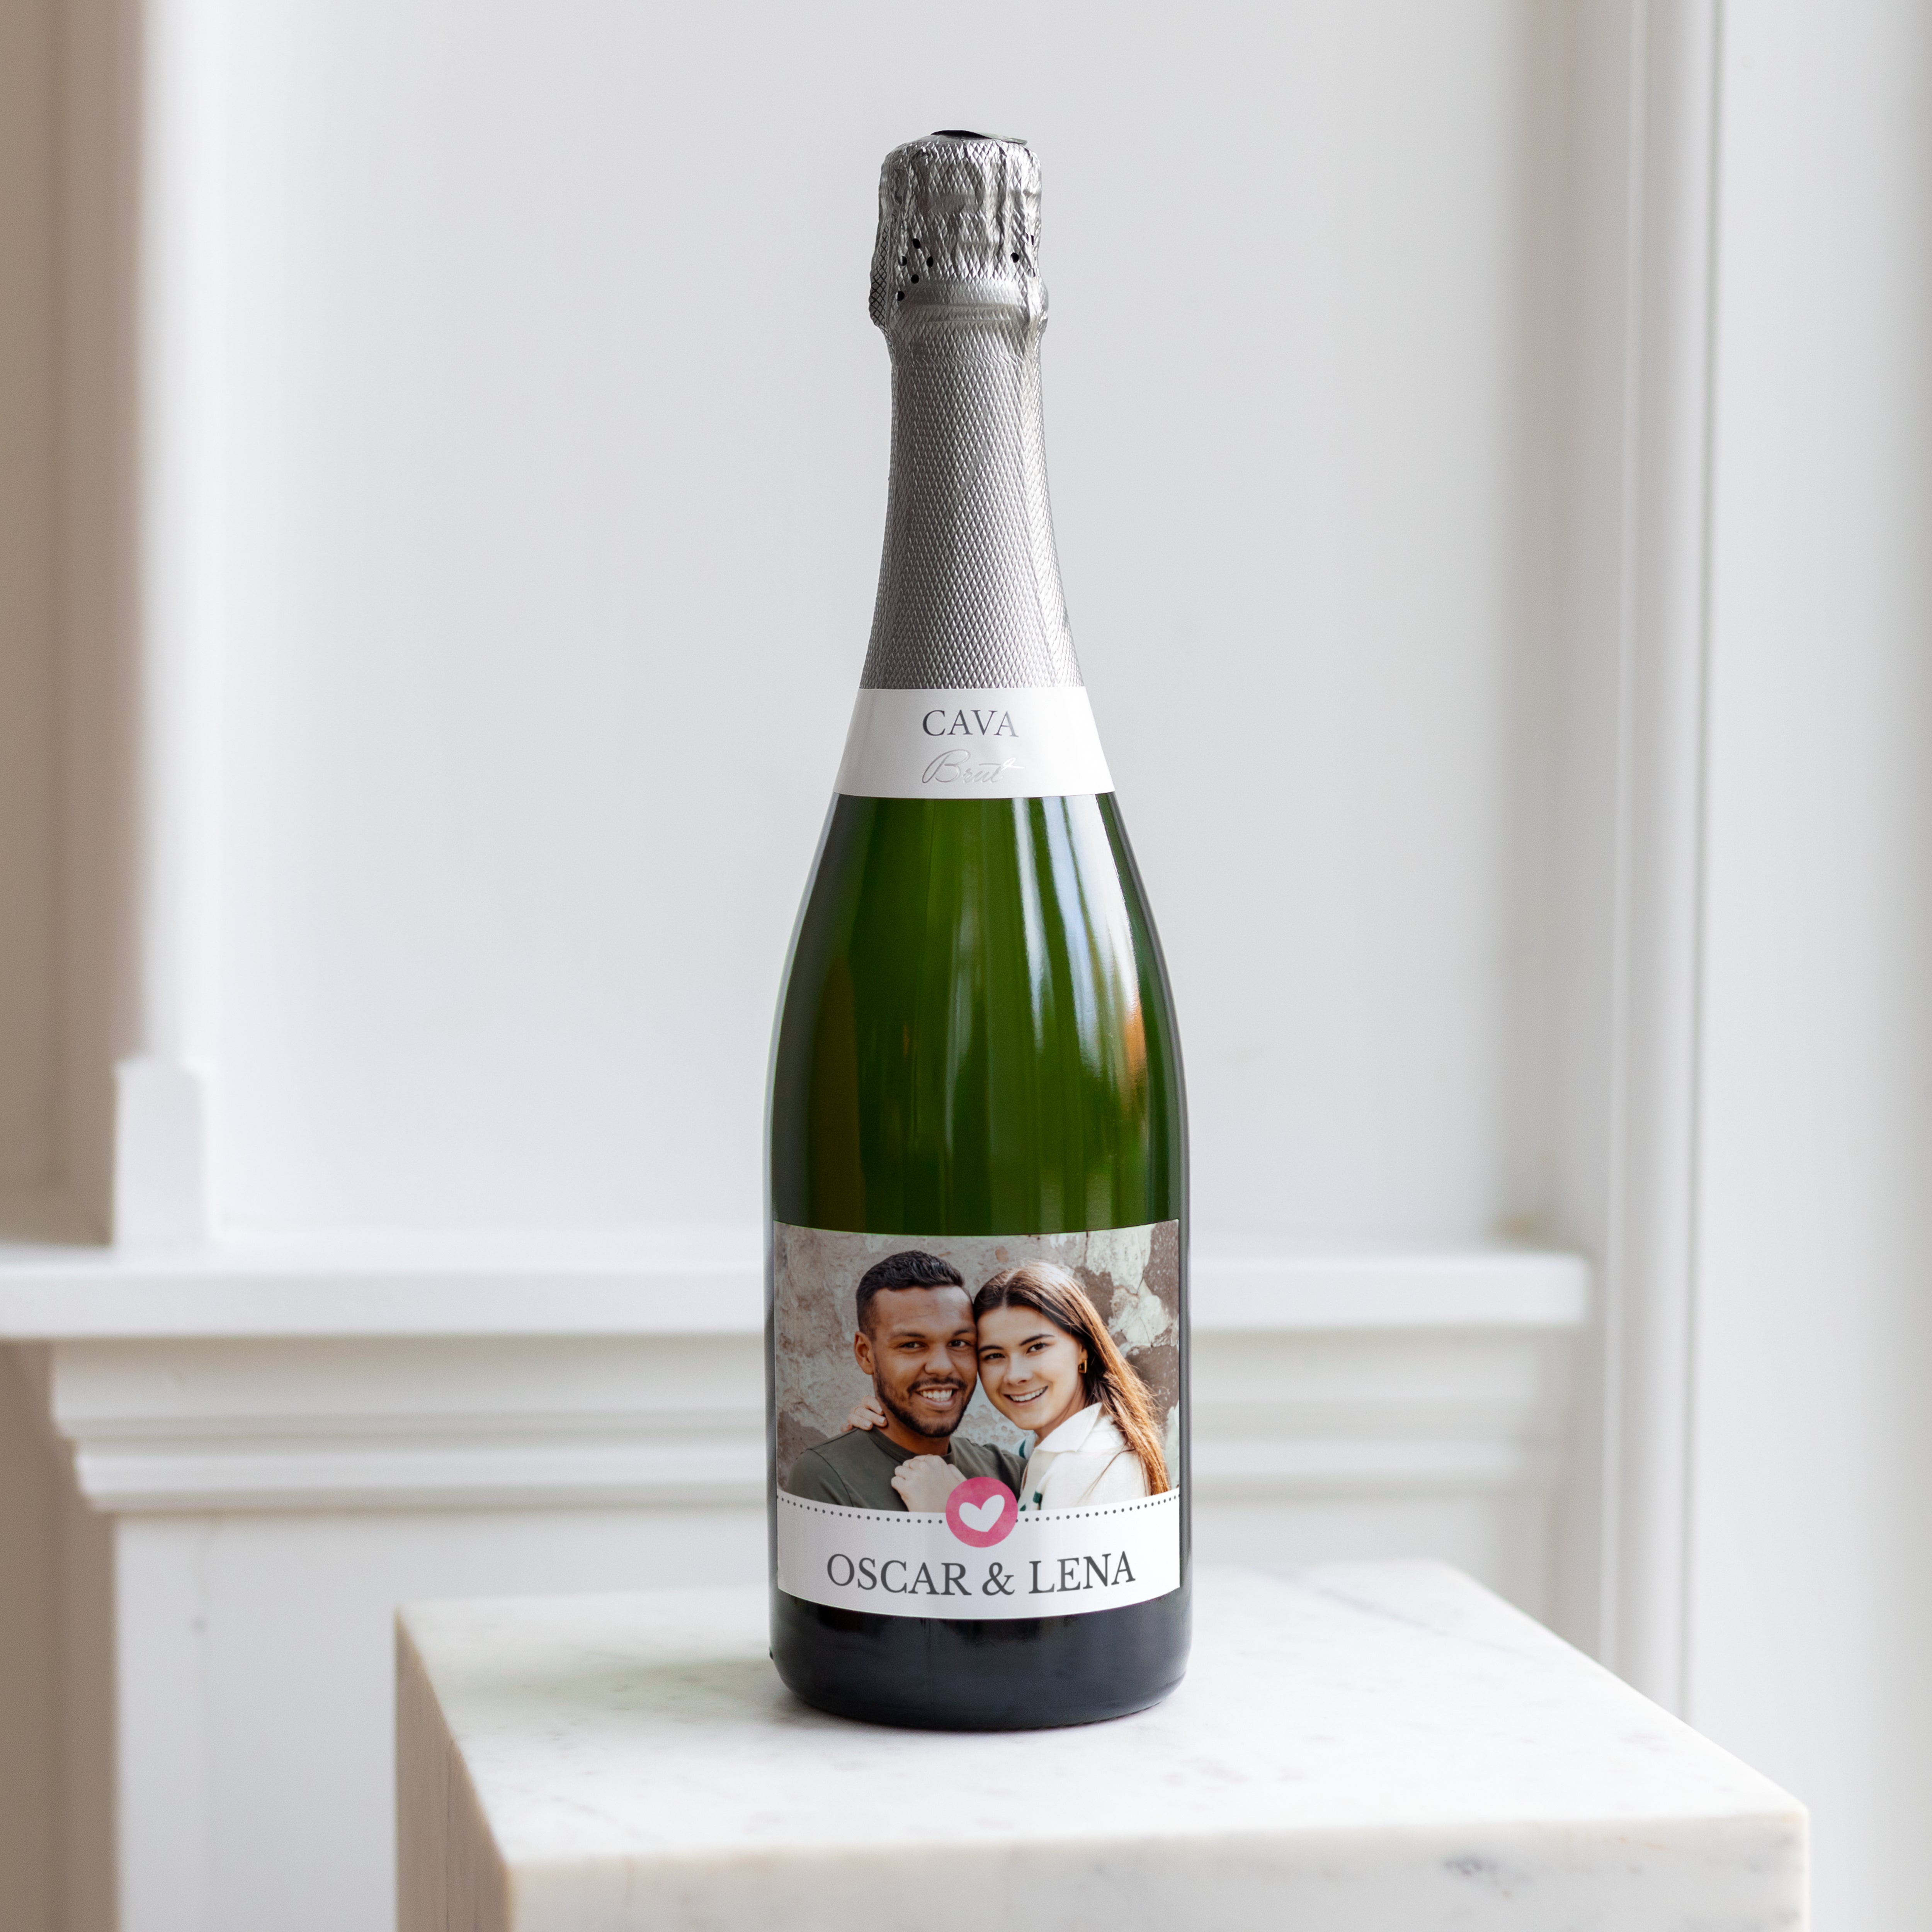 Personalised champagne gift - Cava Palau Gazo Brut